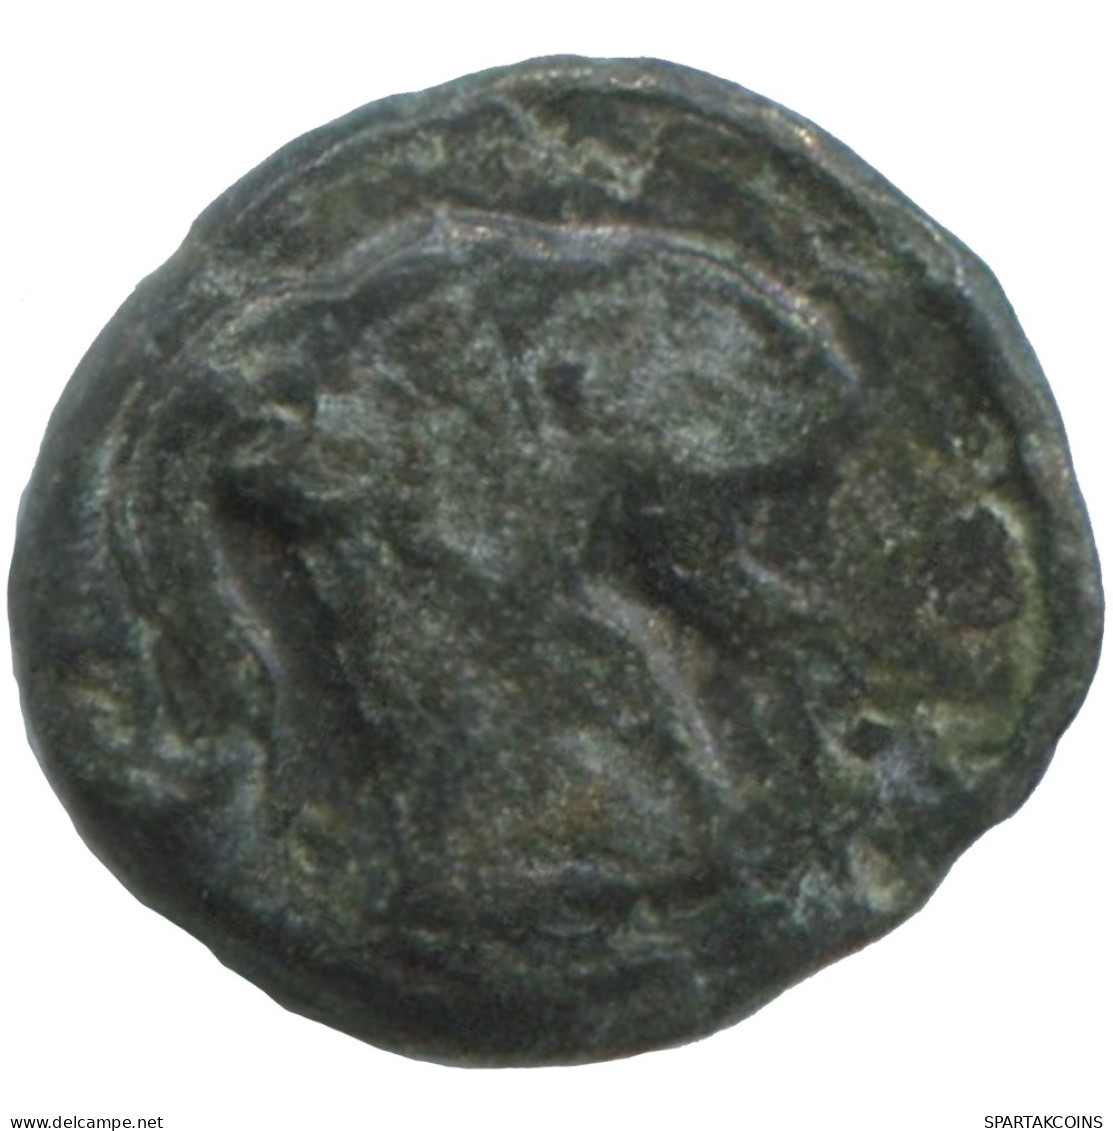 Ancient Antike Authentische Original GRIECHISCHE Münze 0.8g/9mm #SAV1250.11.D.A - Griekenland